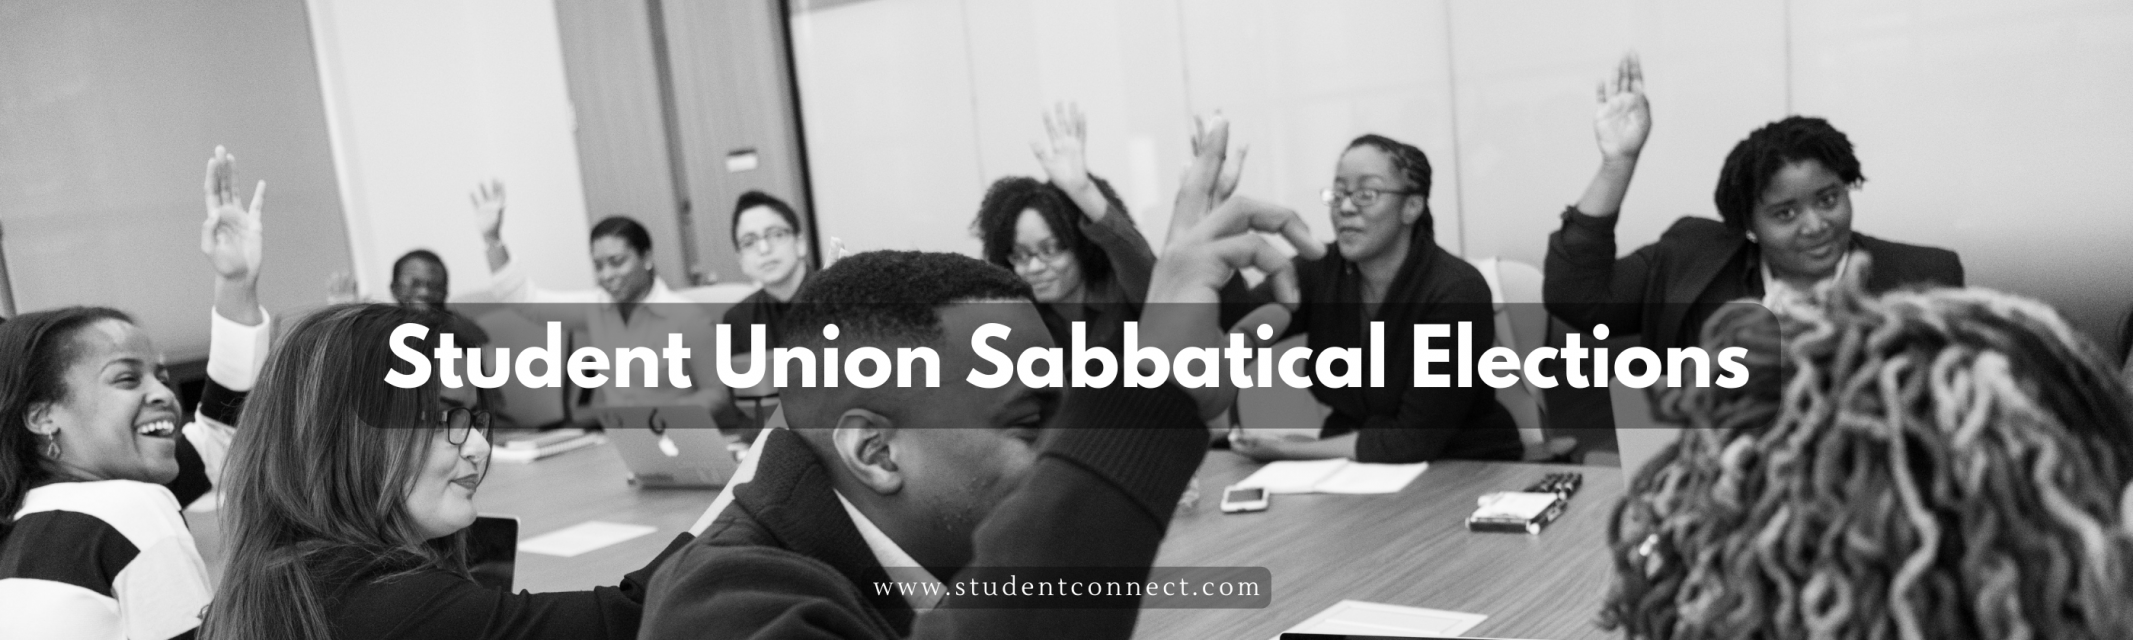 Student Union Sabbatical Elections